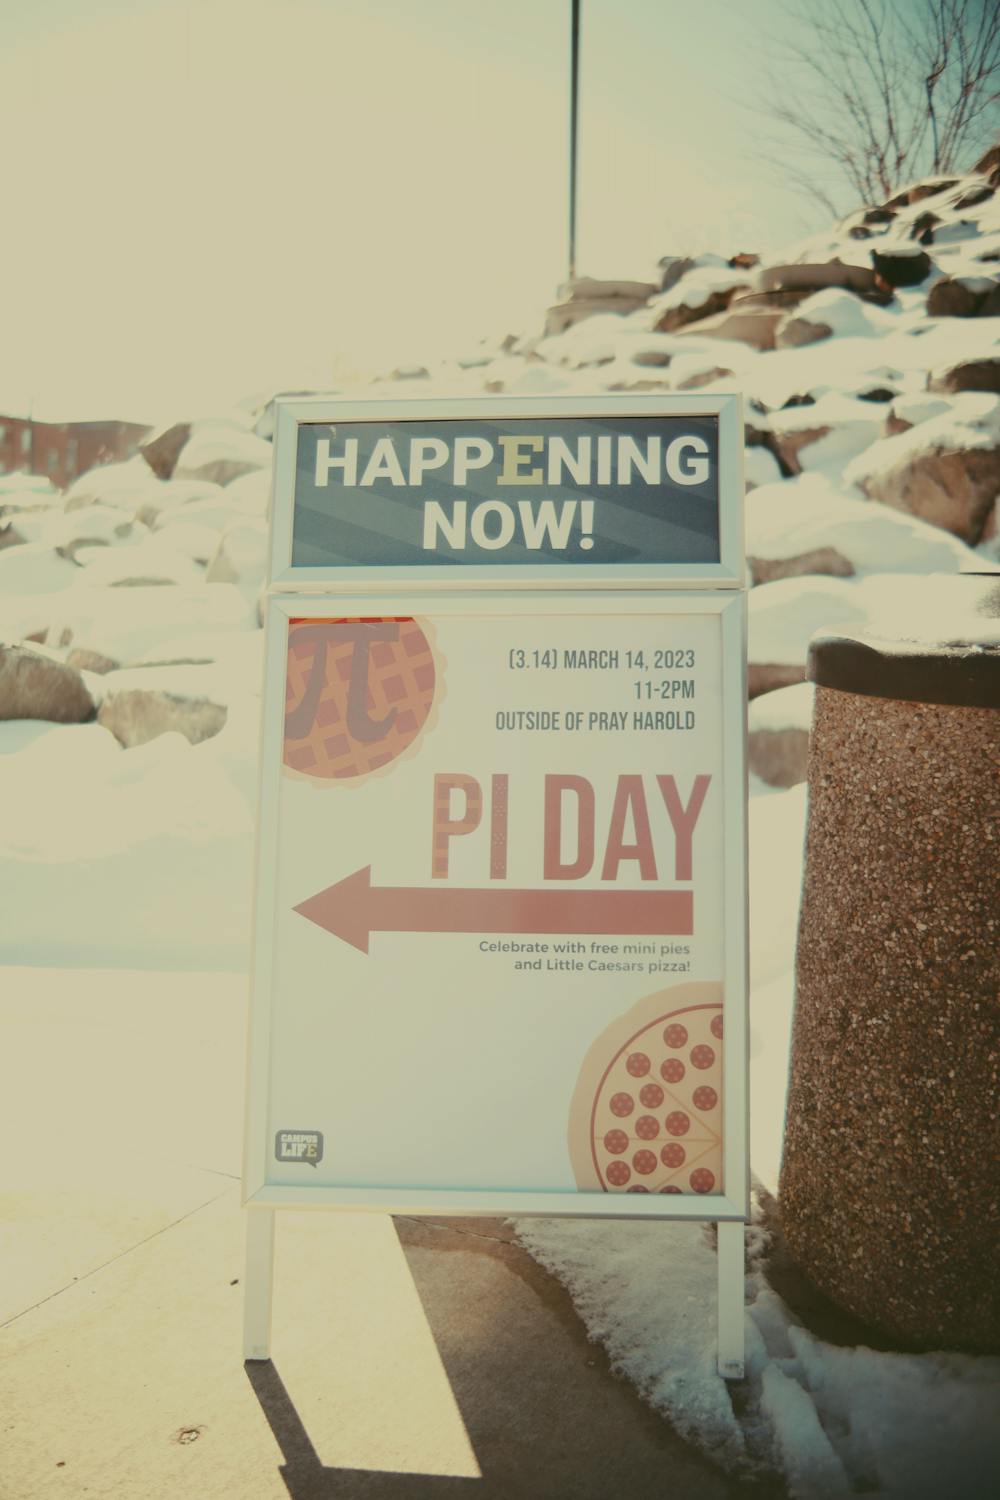 Pi Day brings fun festivities to the city of Ypsilanti 